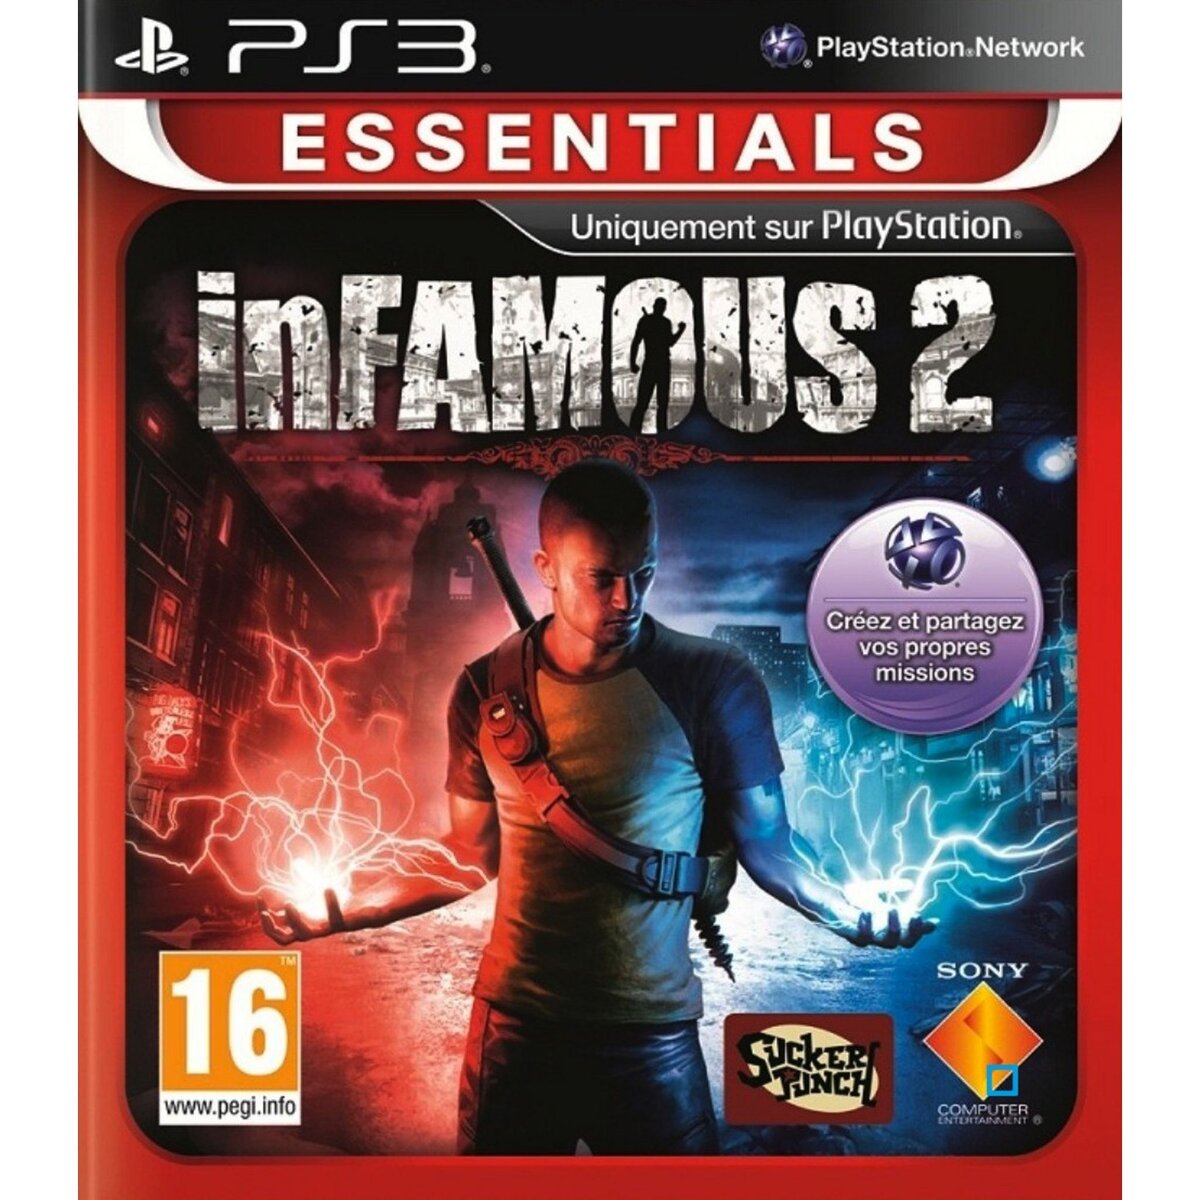 inFamous 2 PS3